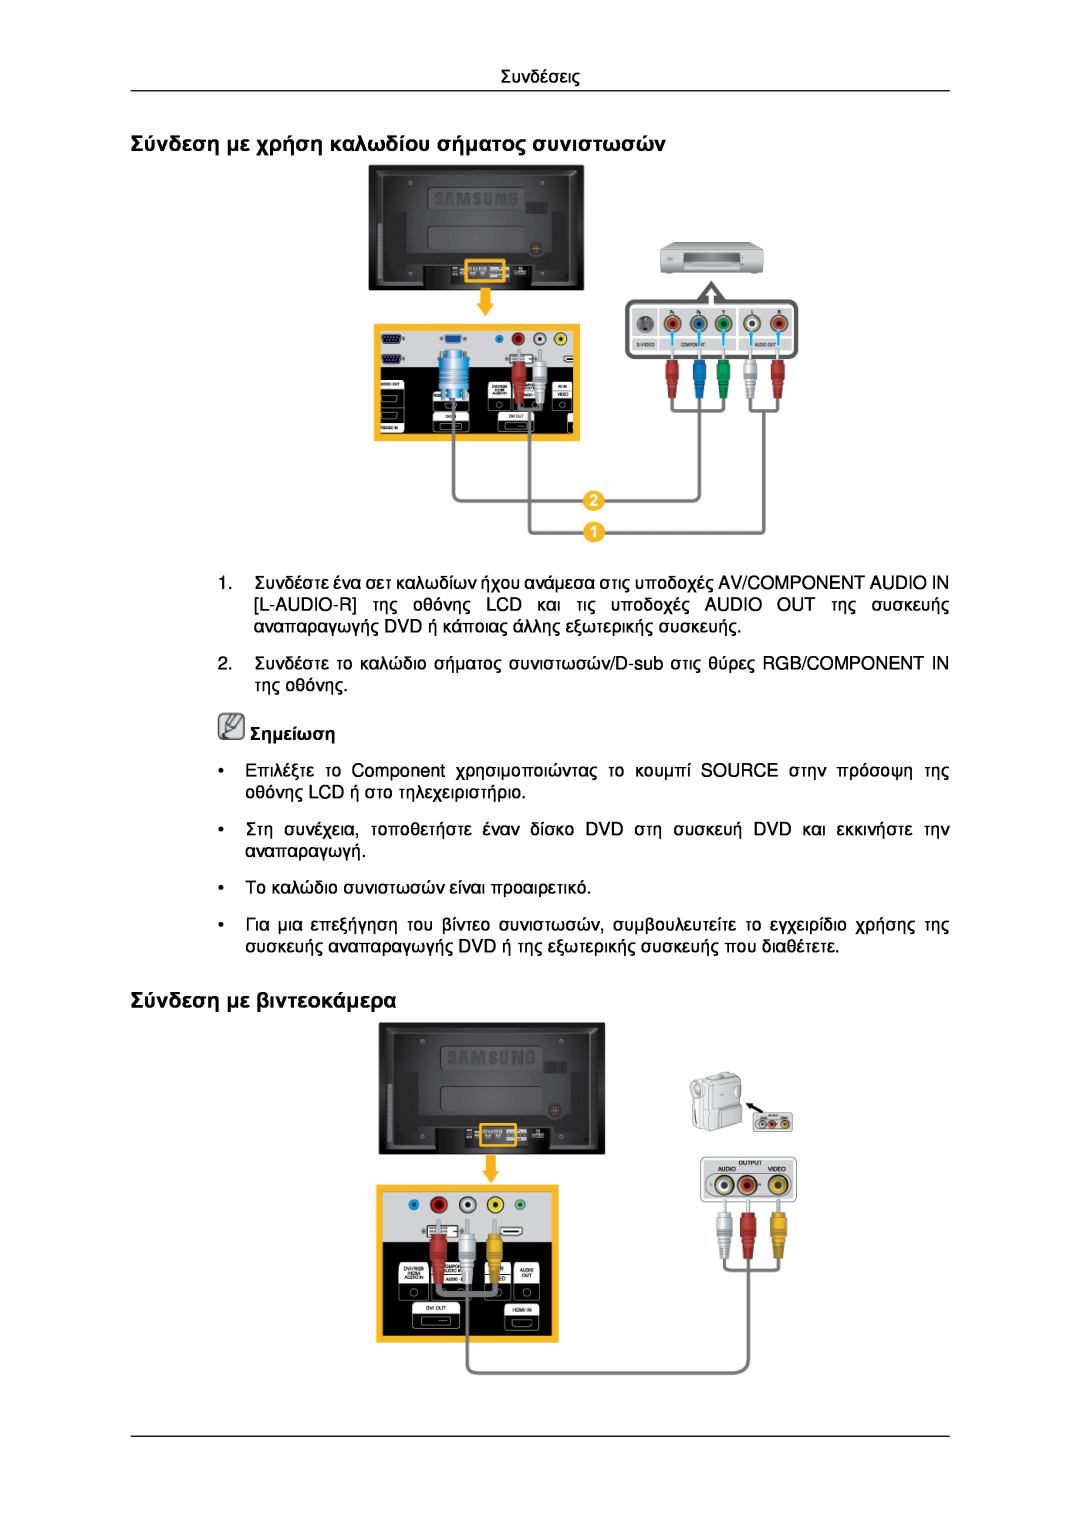 Samsung LH40MRTLBC/EN, LH46MRPLBF/EN manual Σύνδεση με χρήση καλωδίου σήματος συνιστωσών, Σύνδεση με βιντεοκάμερα, Σημείωση 